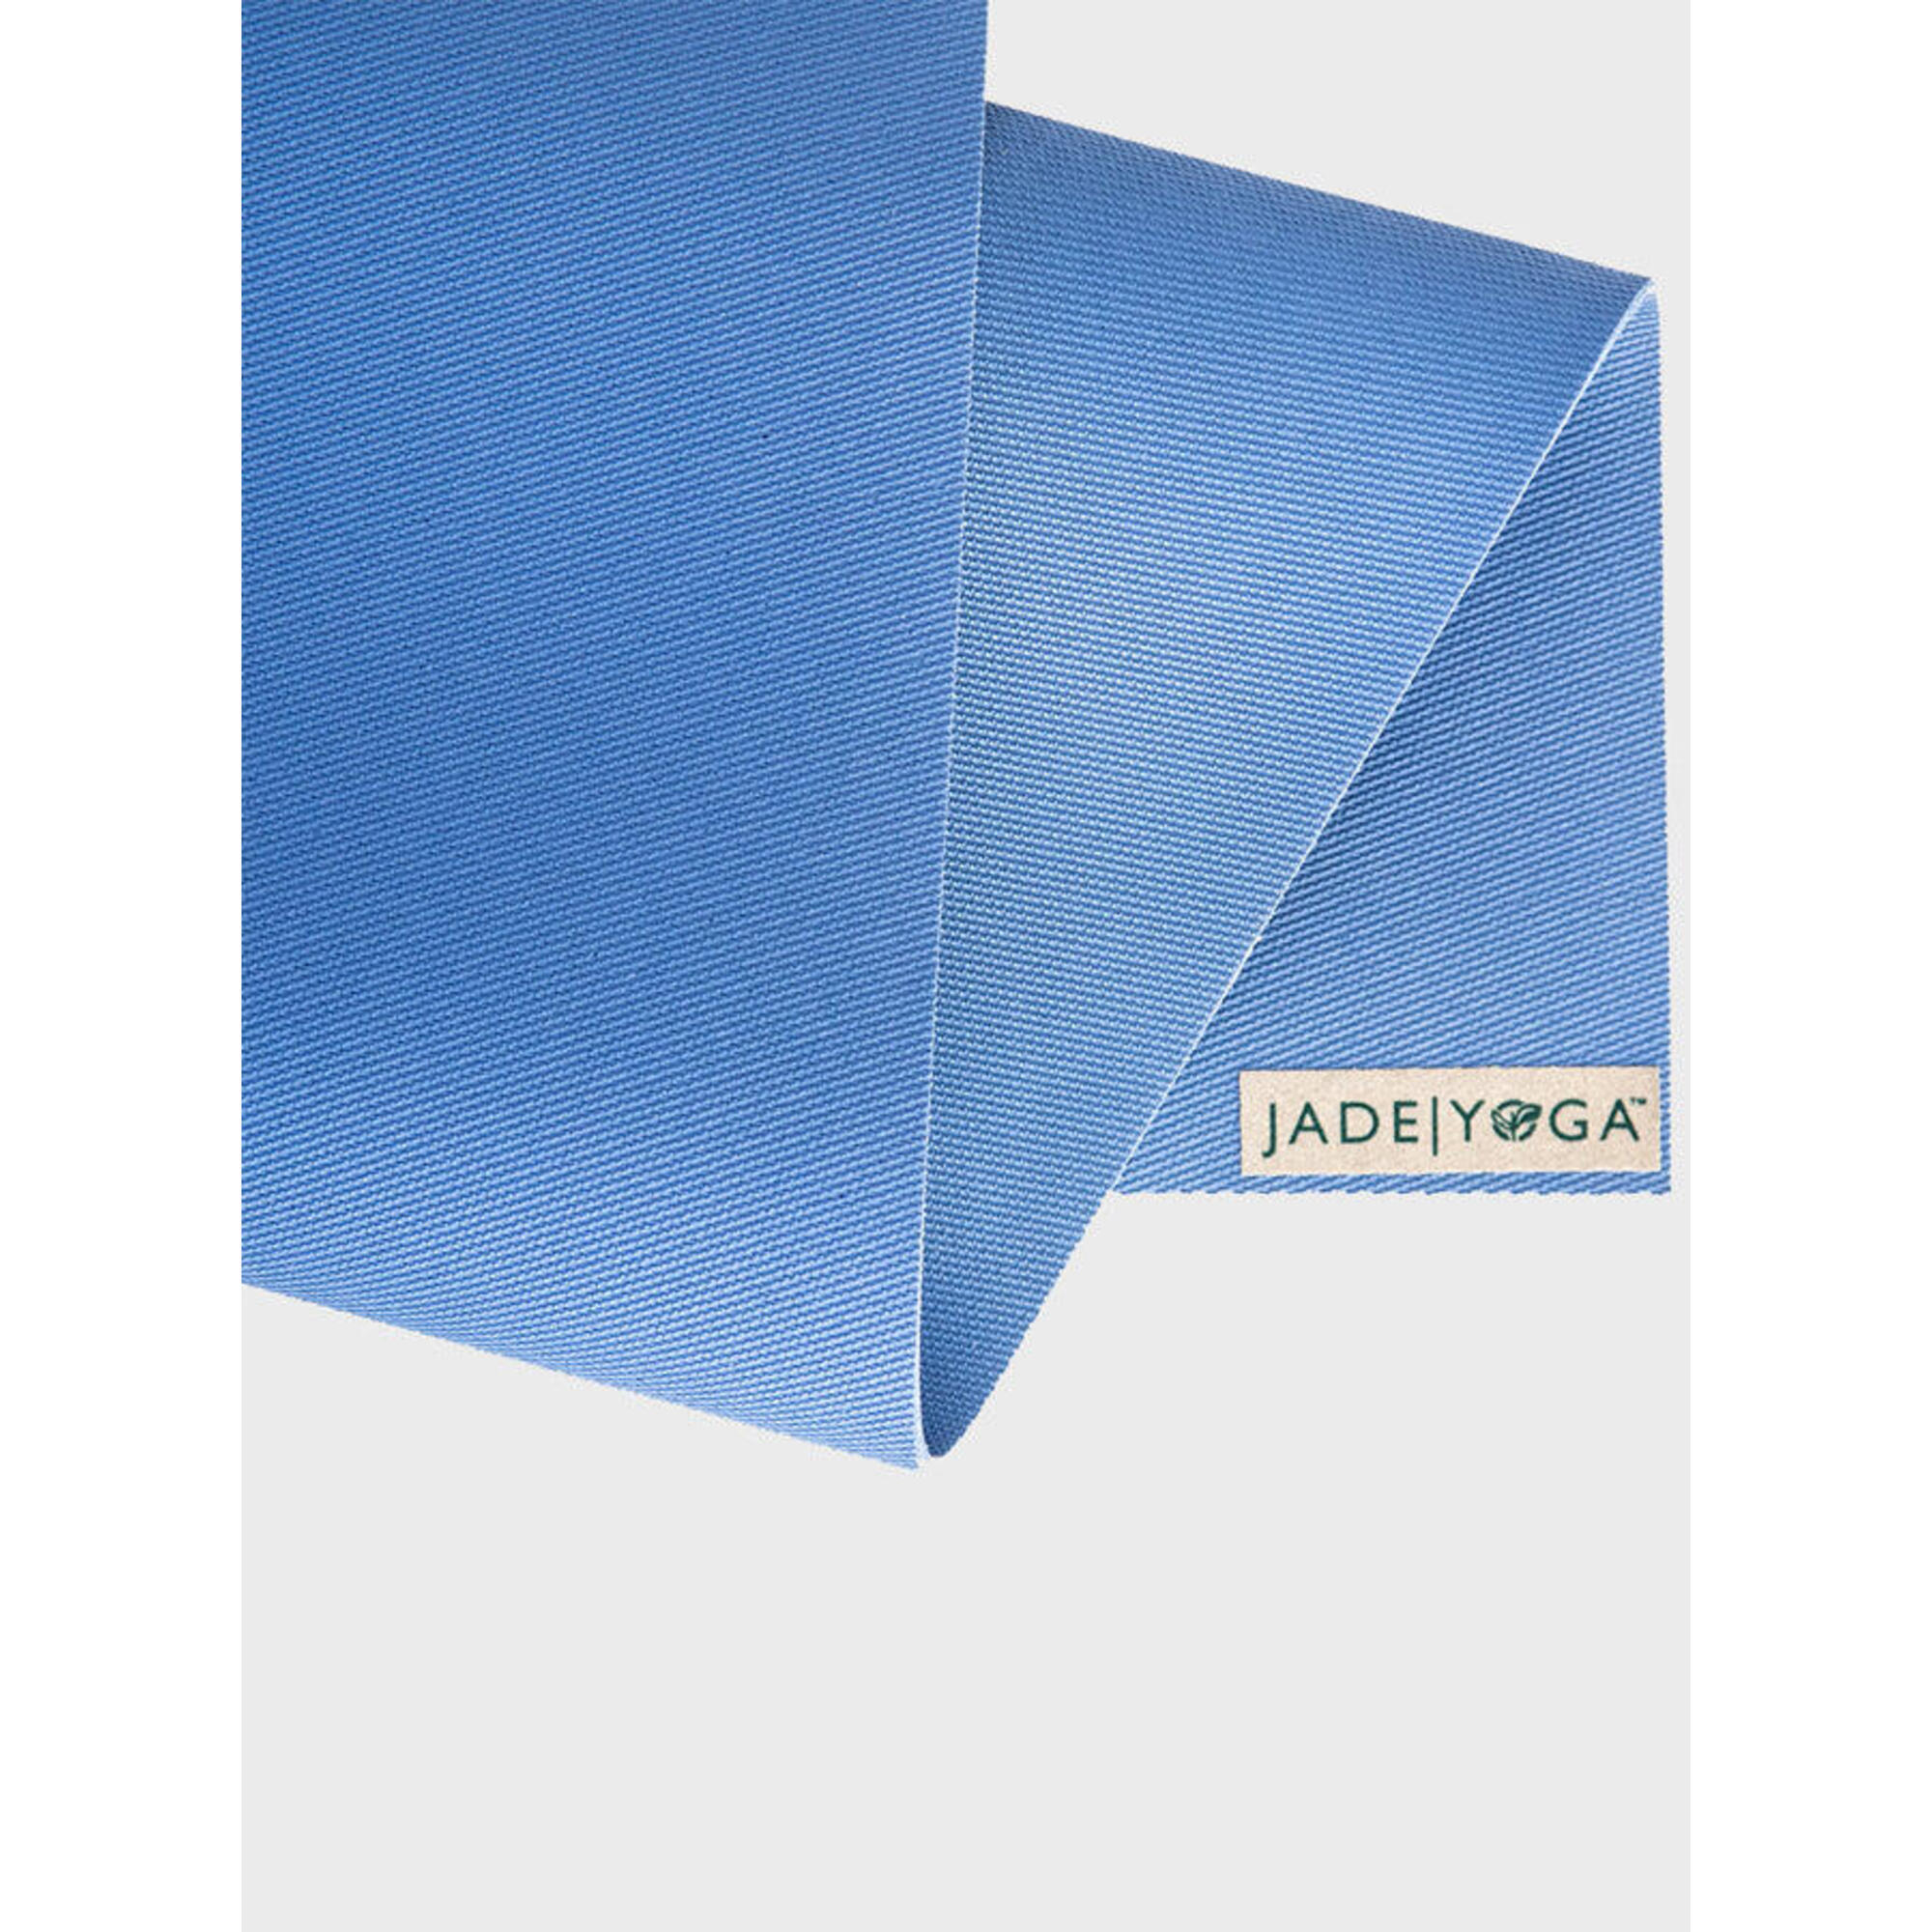 Jade Yoga Harmony 68 Inch Yoga Mat 5mm - Slate Blue 1/1